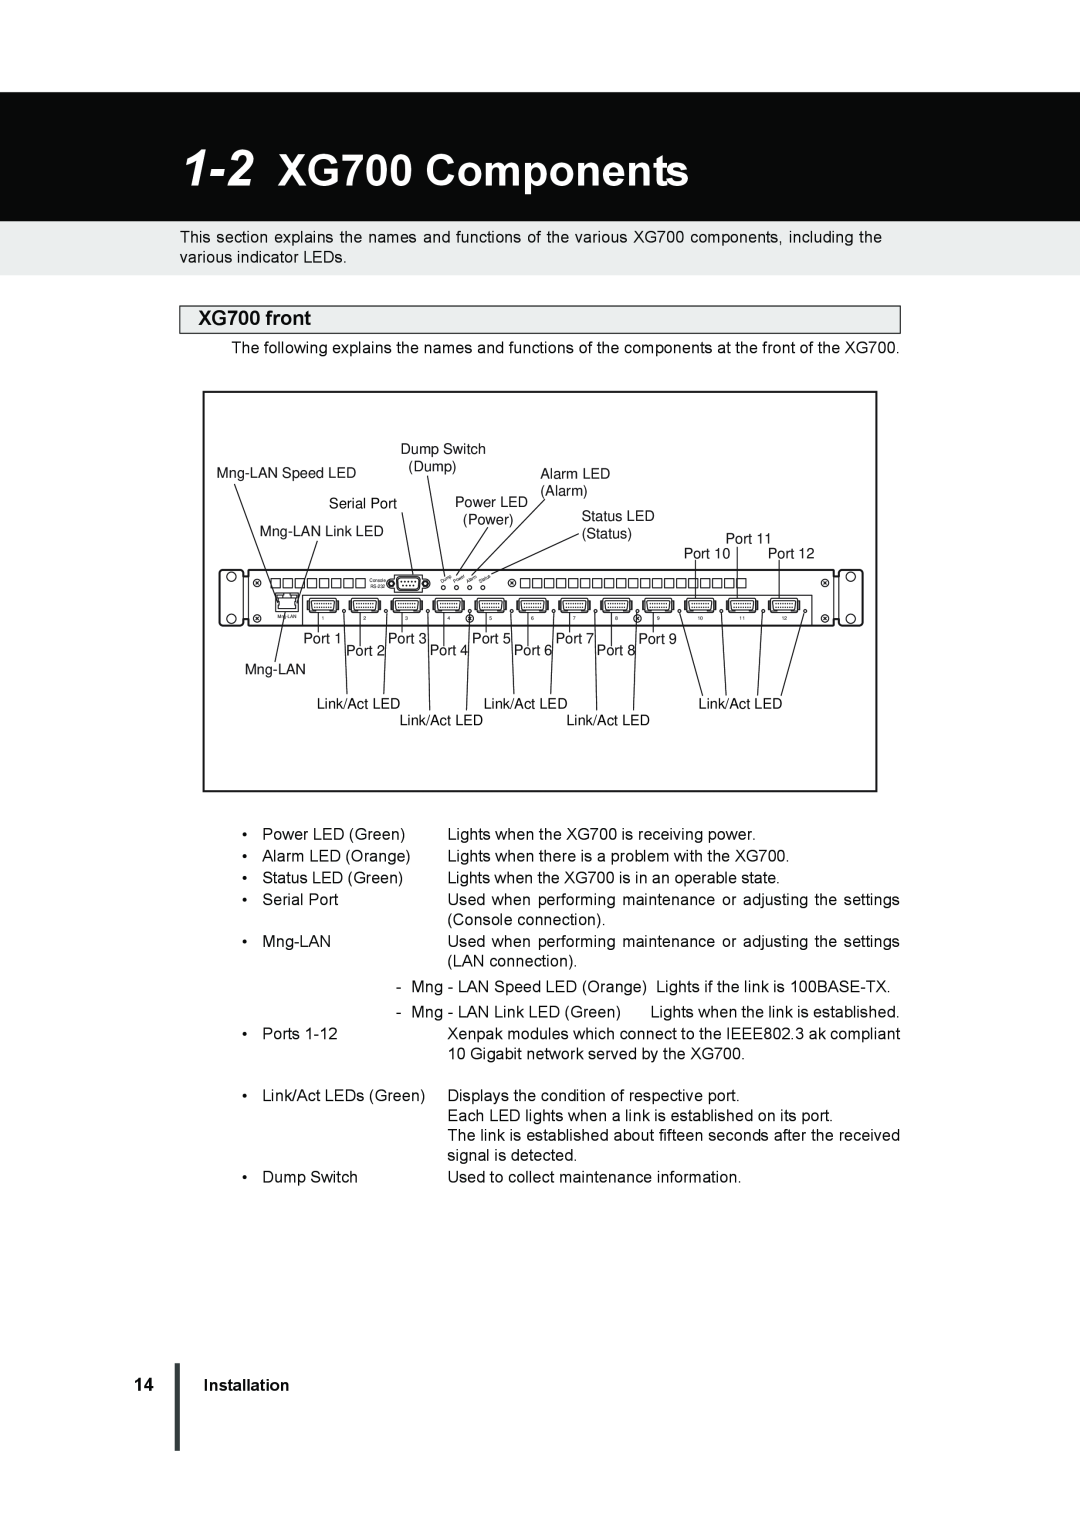 Fujitsu manual 1-2 XG700 Components, XG700 front, Installation 